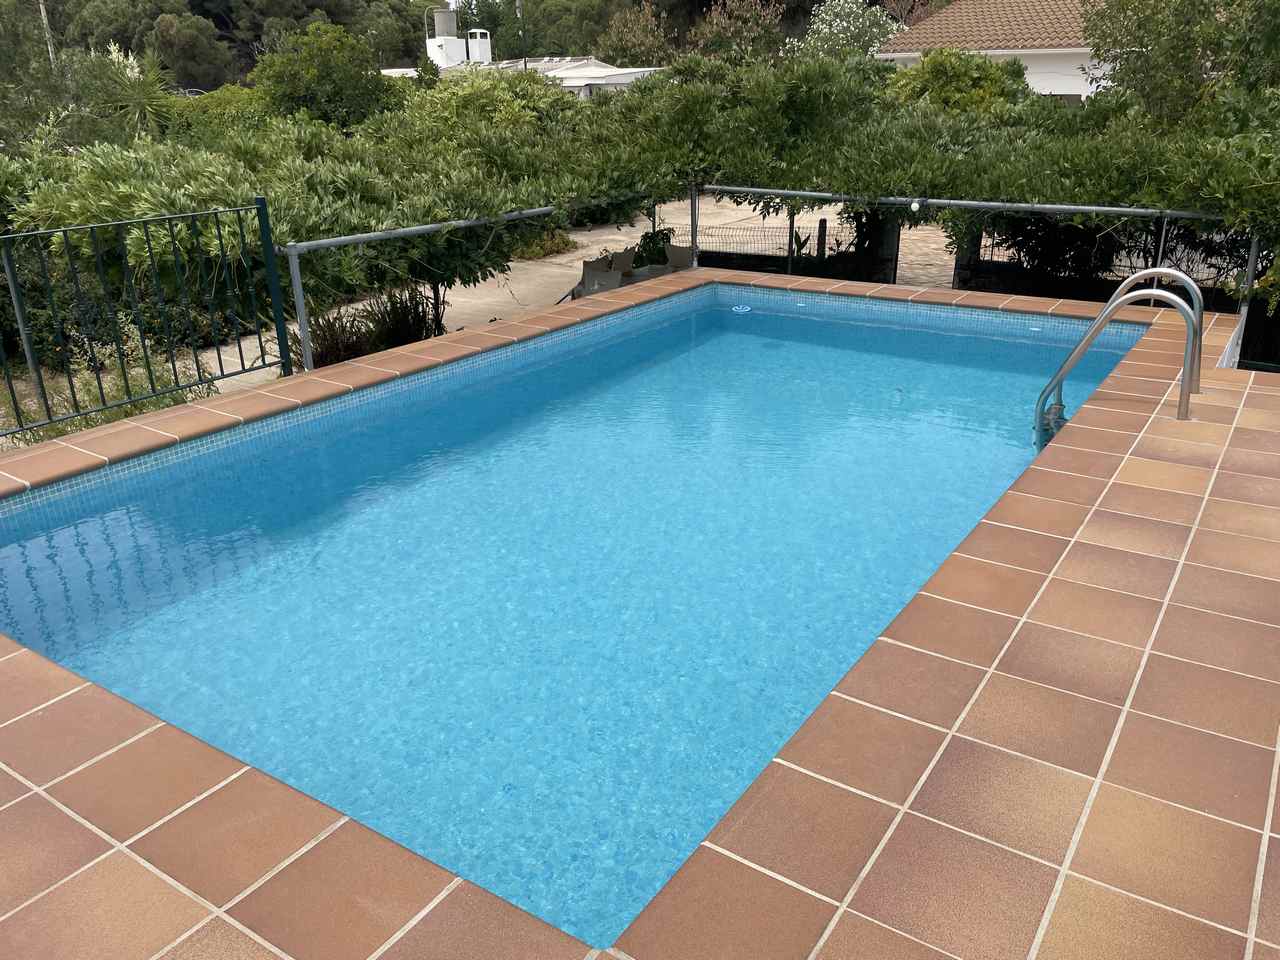 Alquiler de asa rural con piscina en Huelva, casa rural en Aljaraque, Huelva